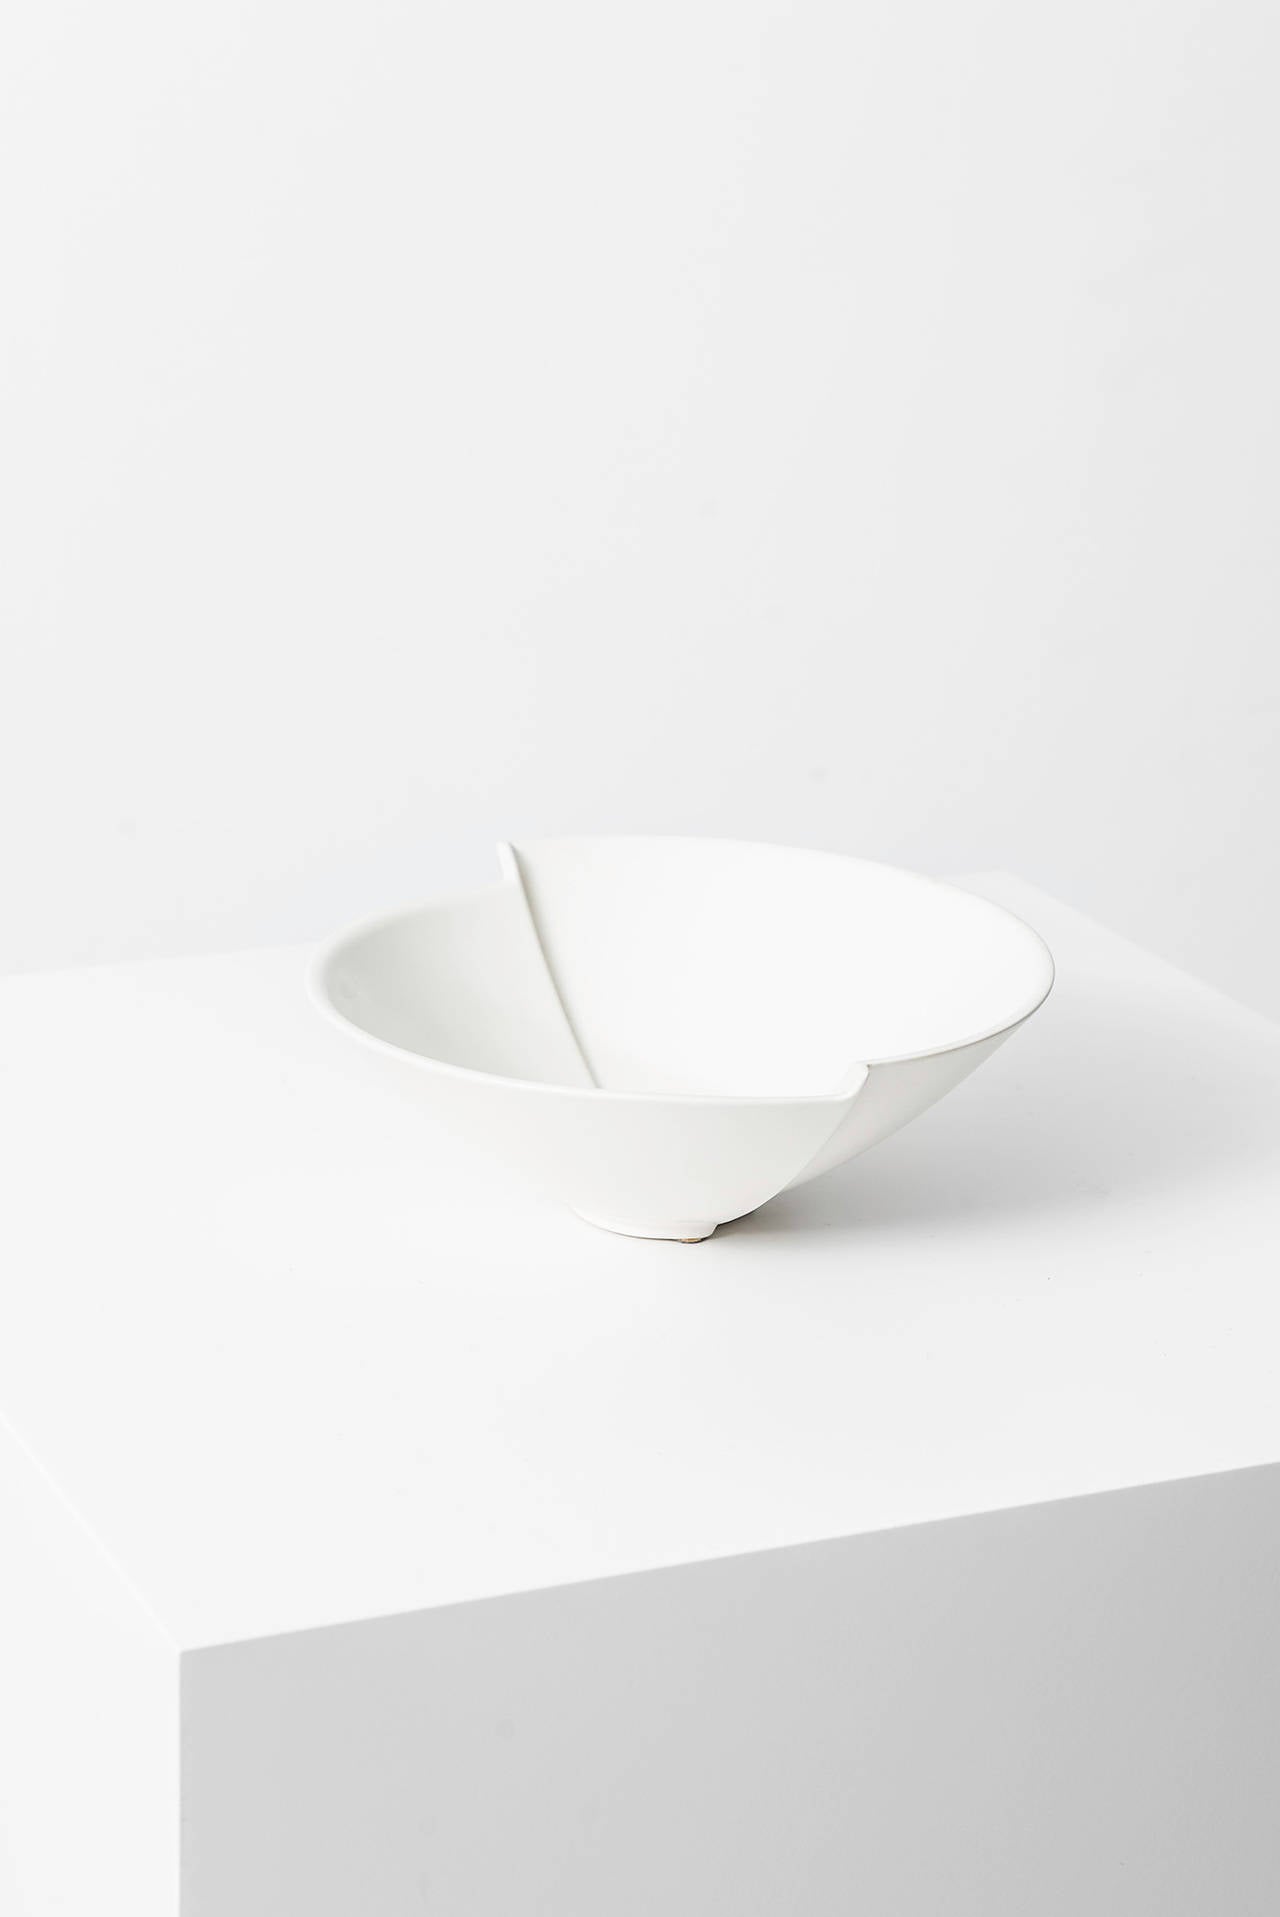 Wilhelm Kåge Ceramic Bowl Model Surrea by Gustavsberg in Sweden In Excellent Condition For Sale In Malmo, SE